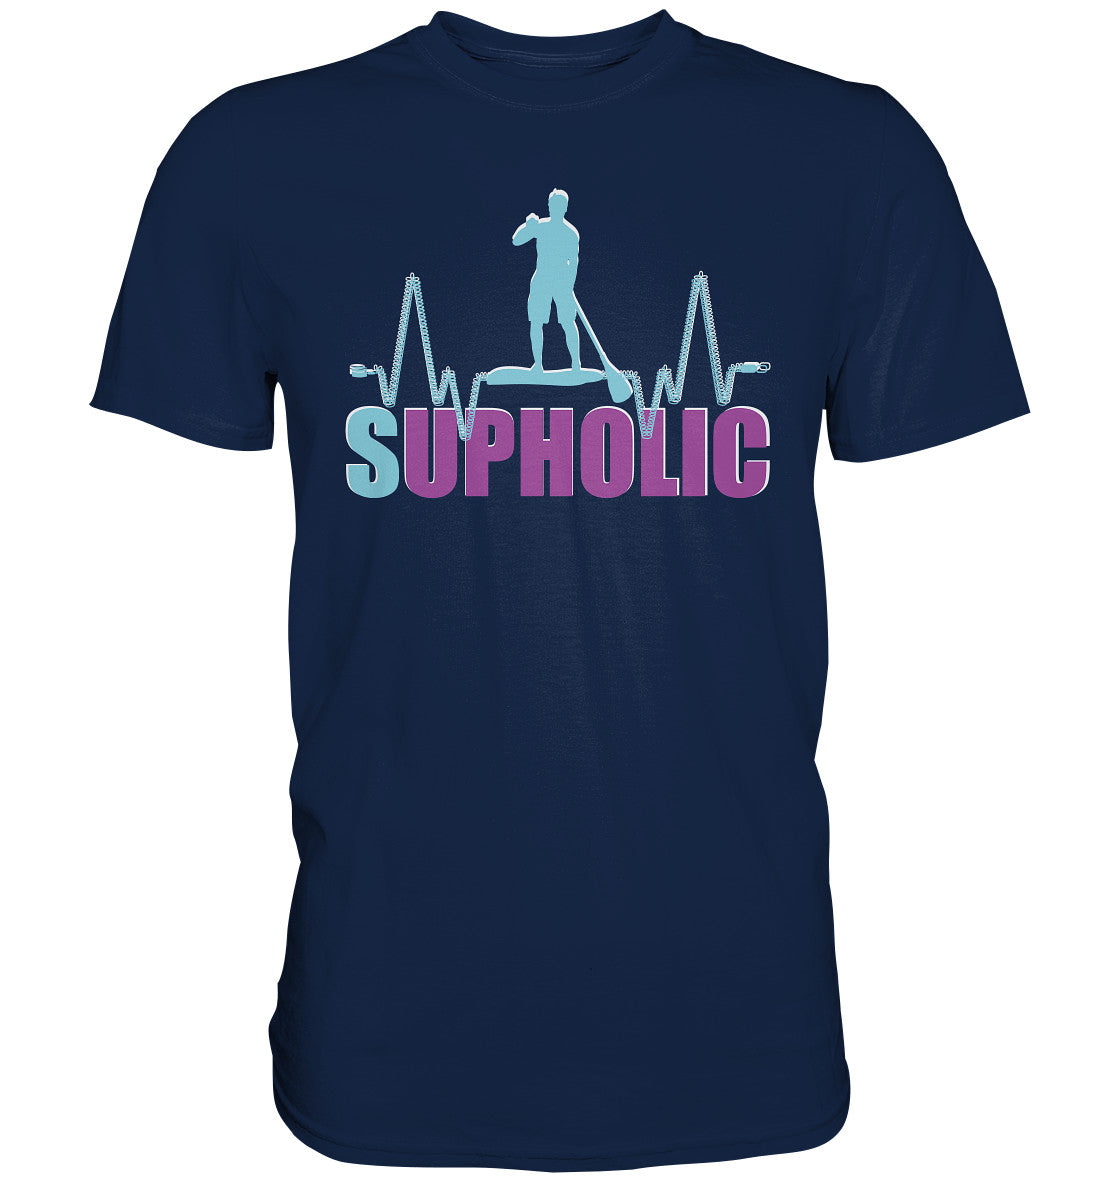 SUPHOLIC Boy - Classic Shirt